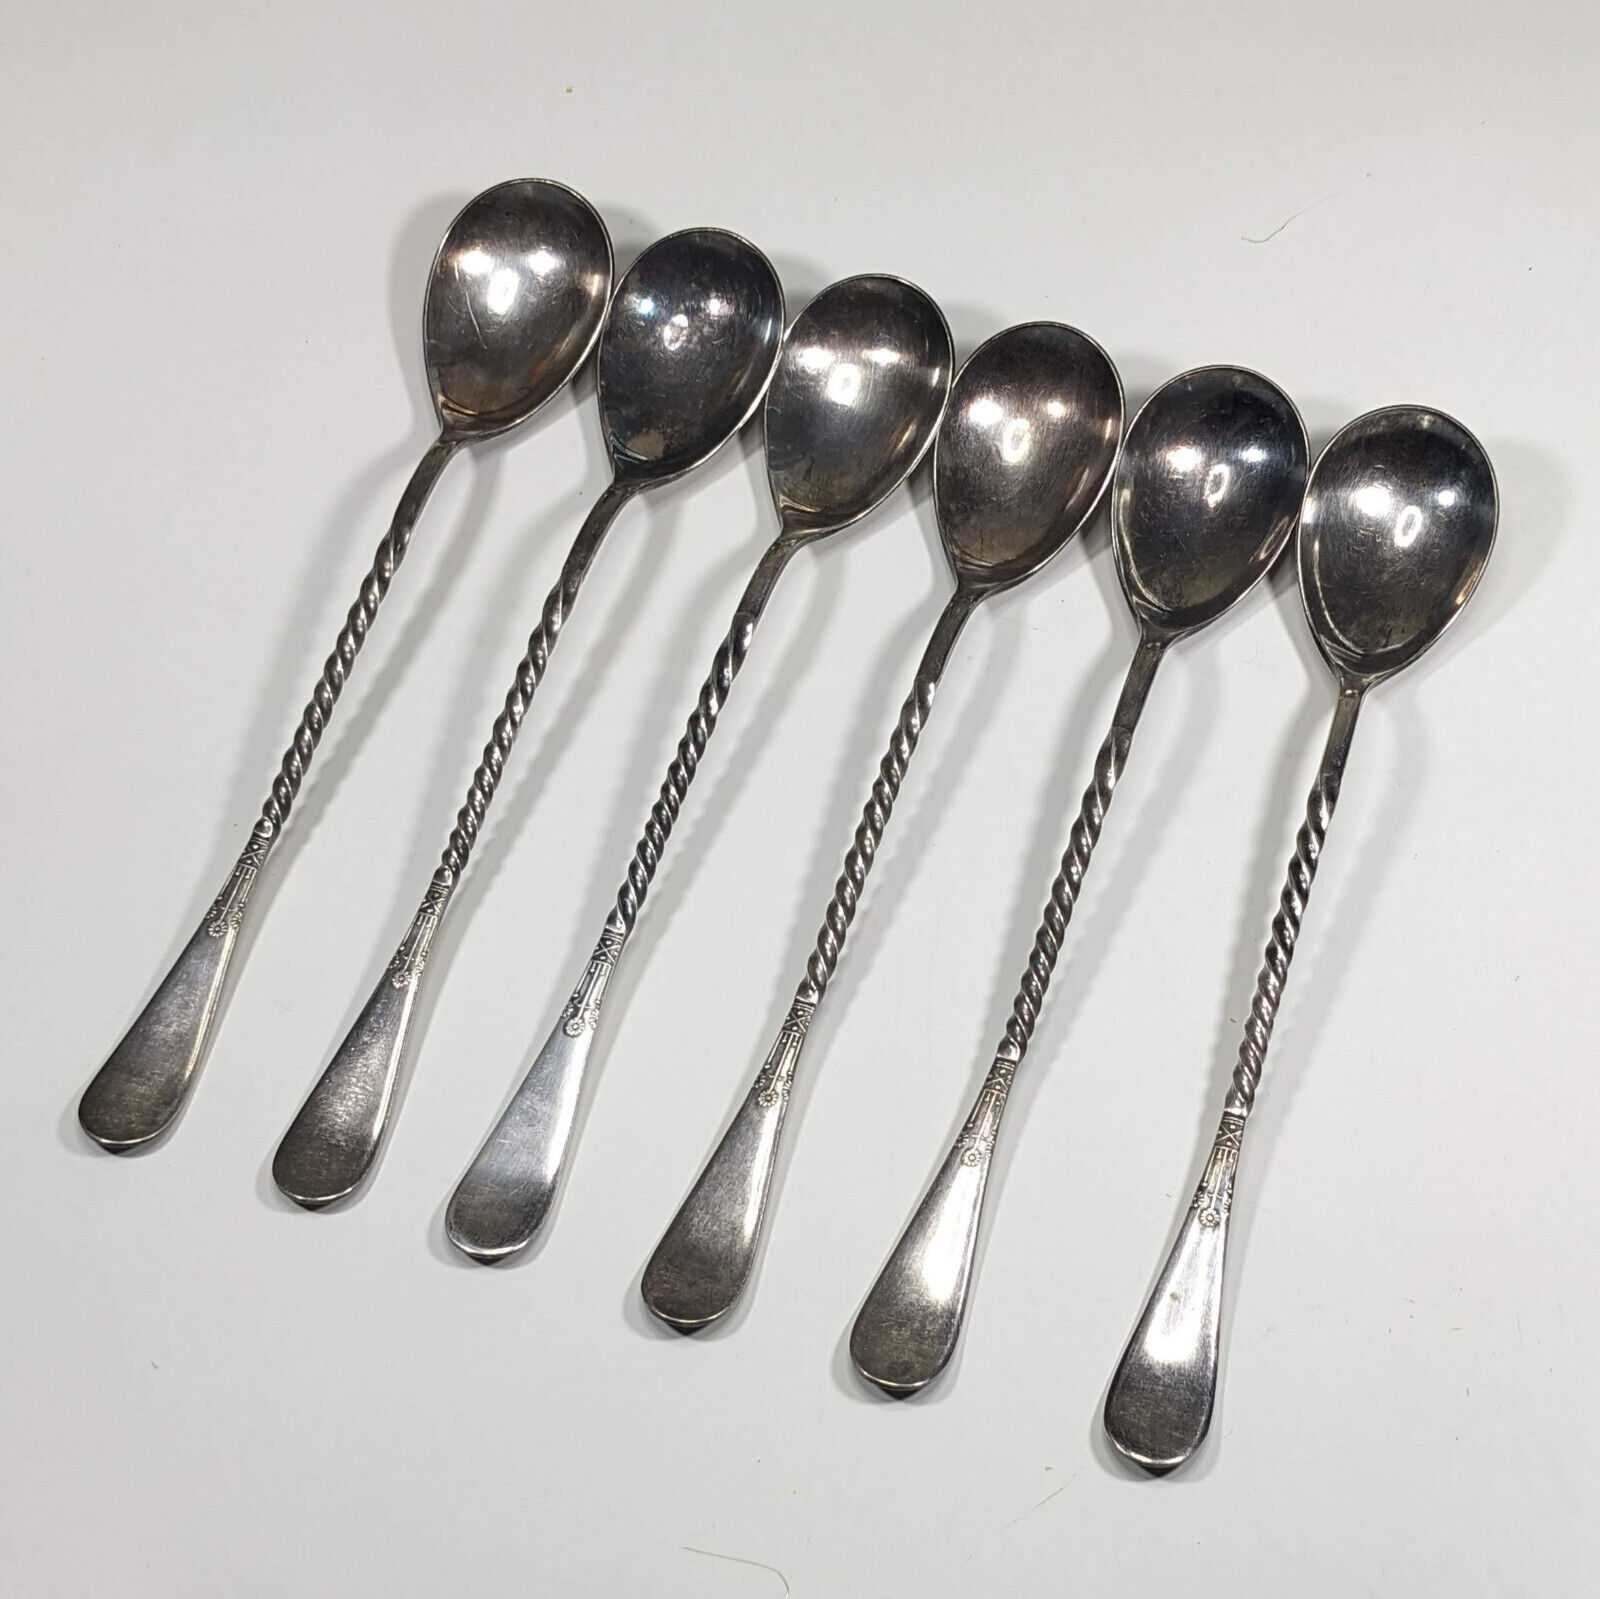 John Matthews Apparatus Co. Soda Spoons 6pc Set - vintage twist rare silverplate